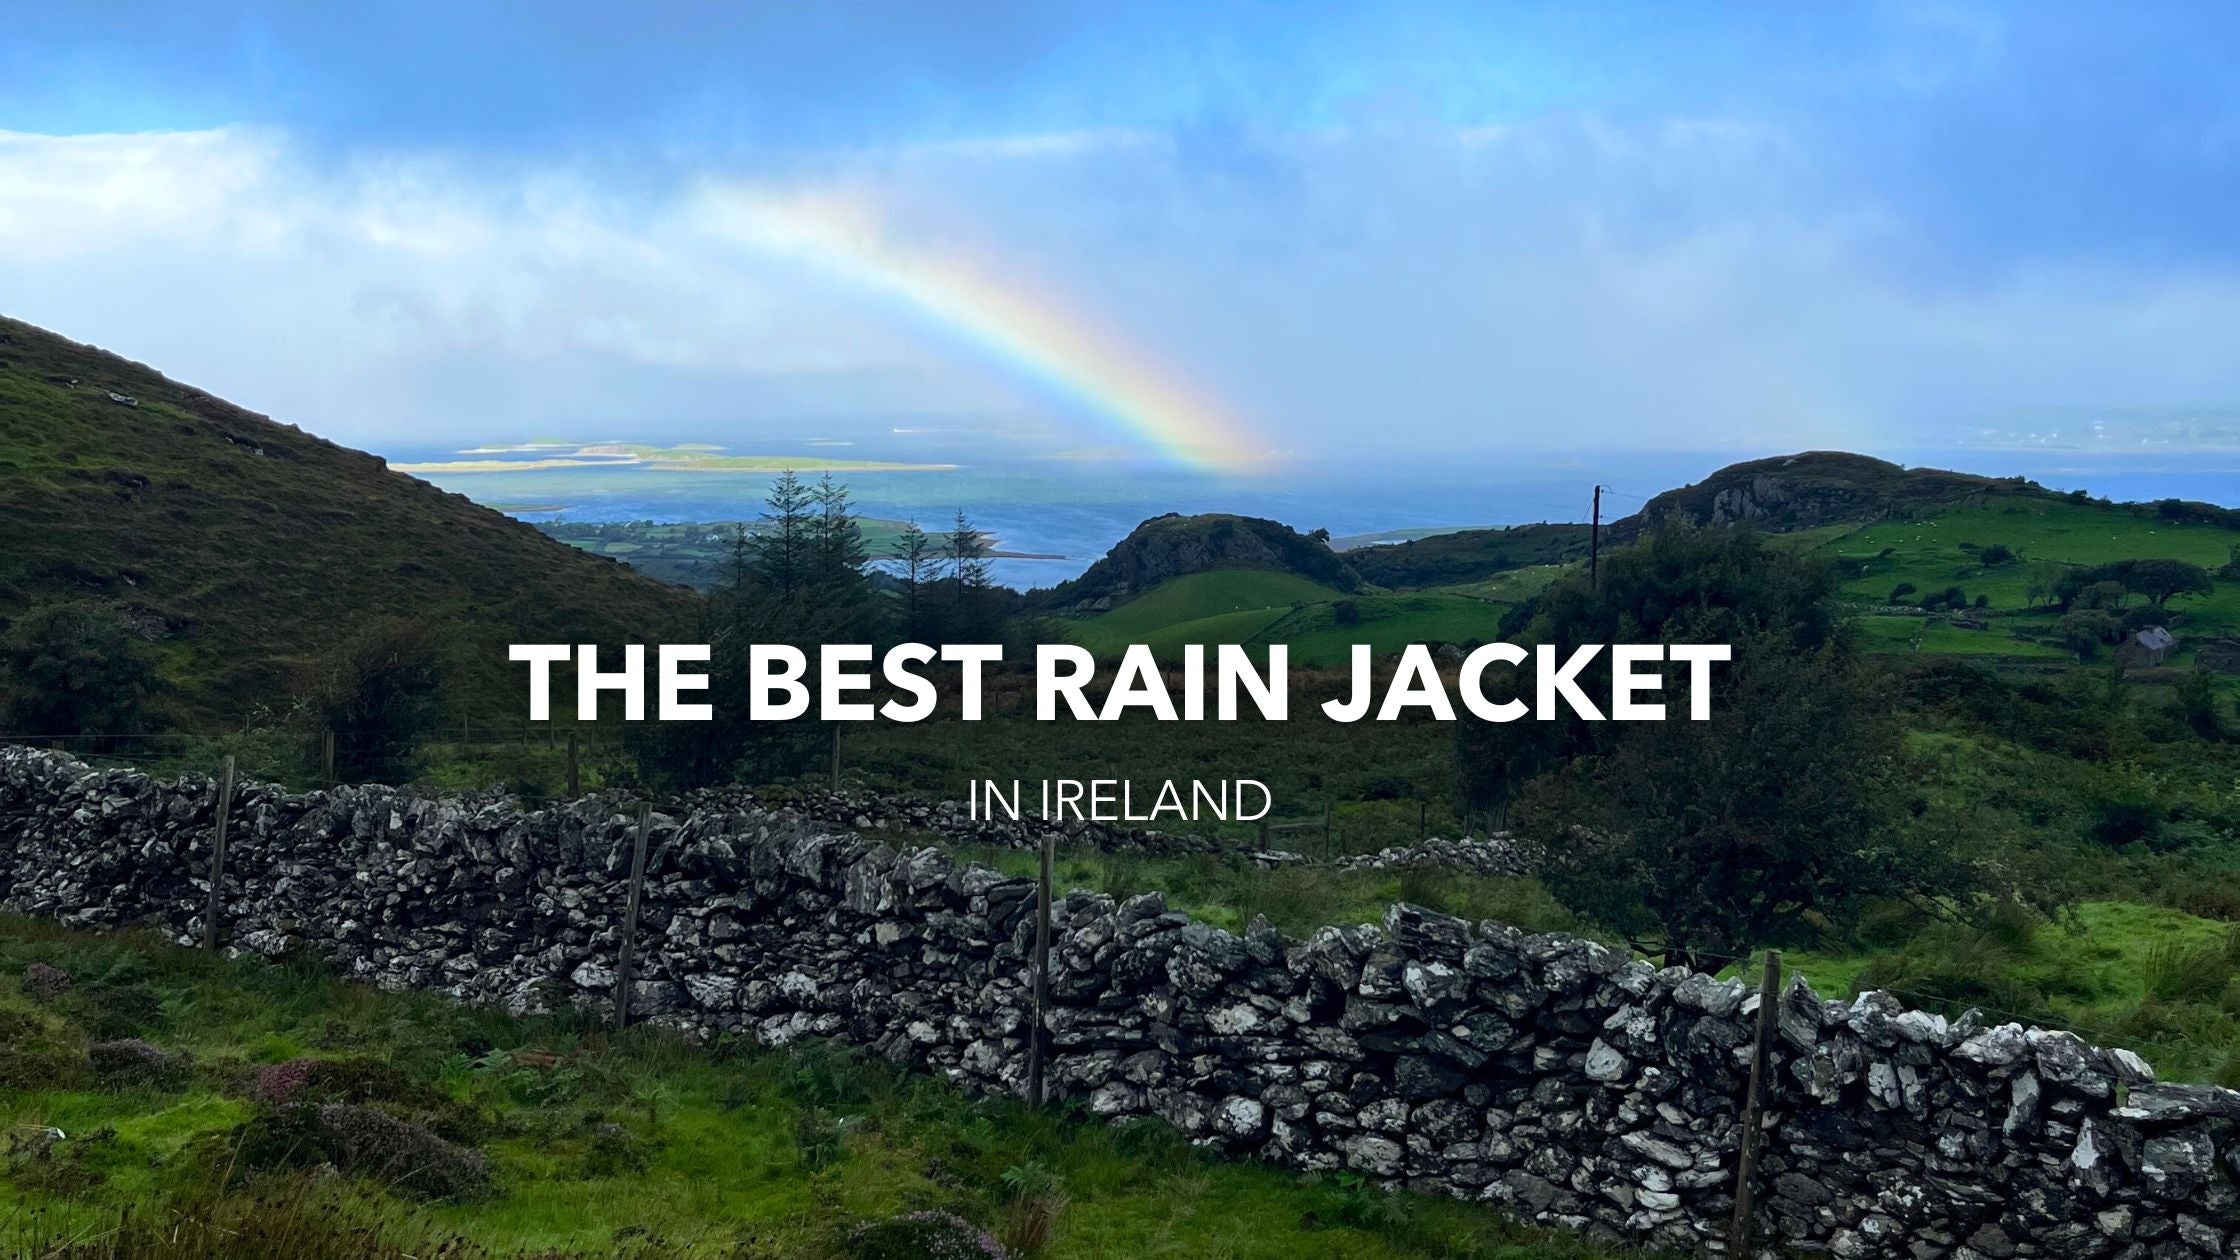 The Best Rain Jacket in Ireland